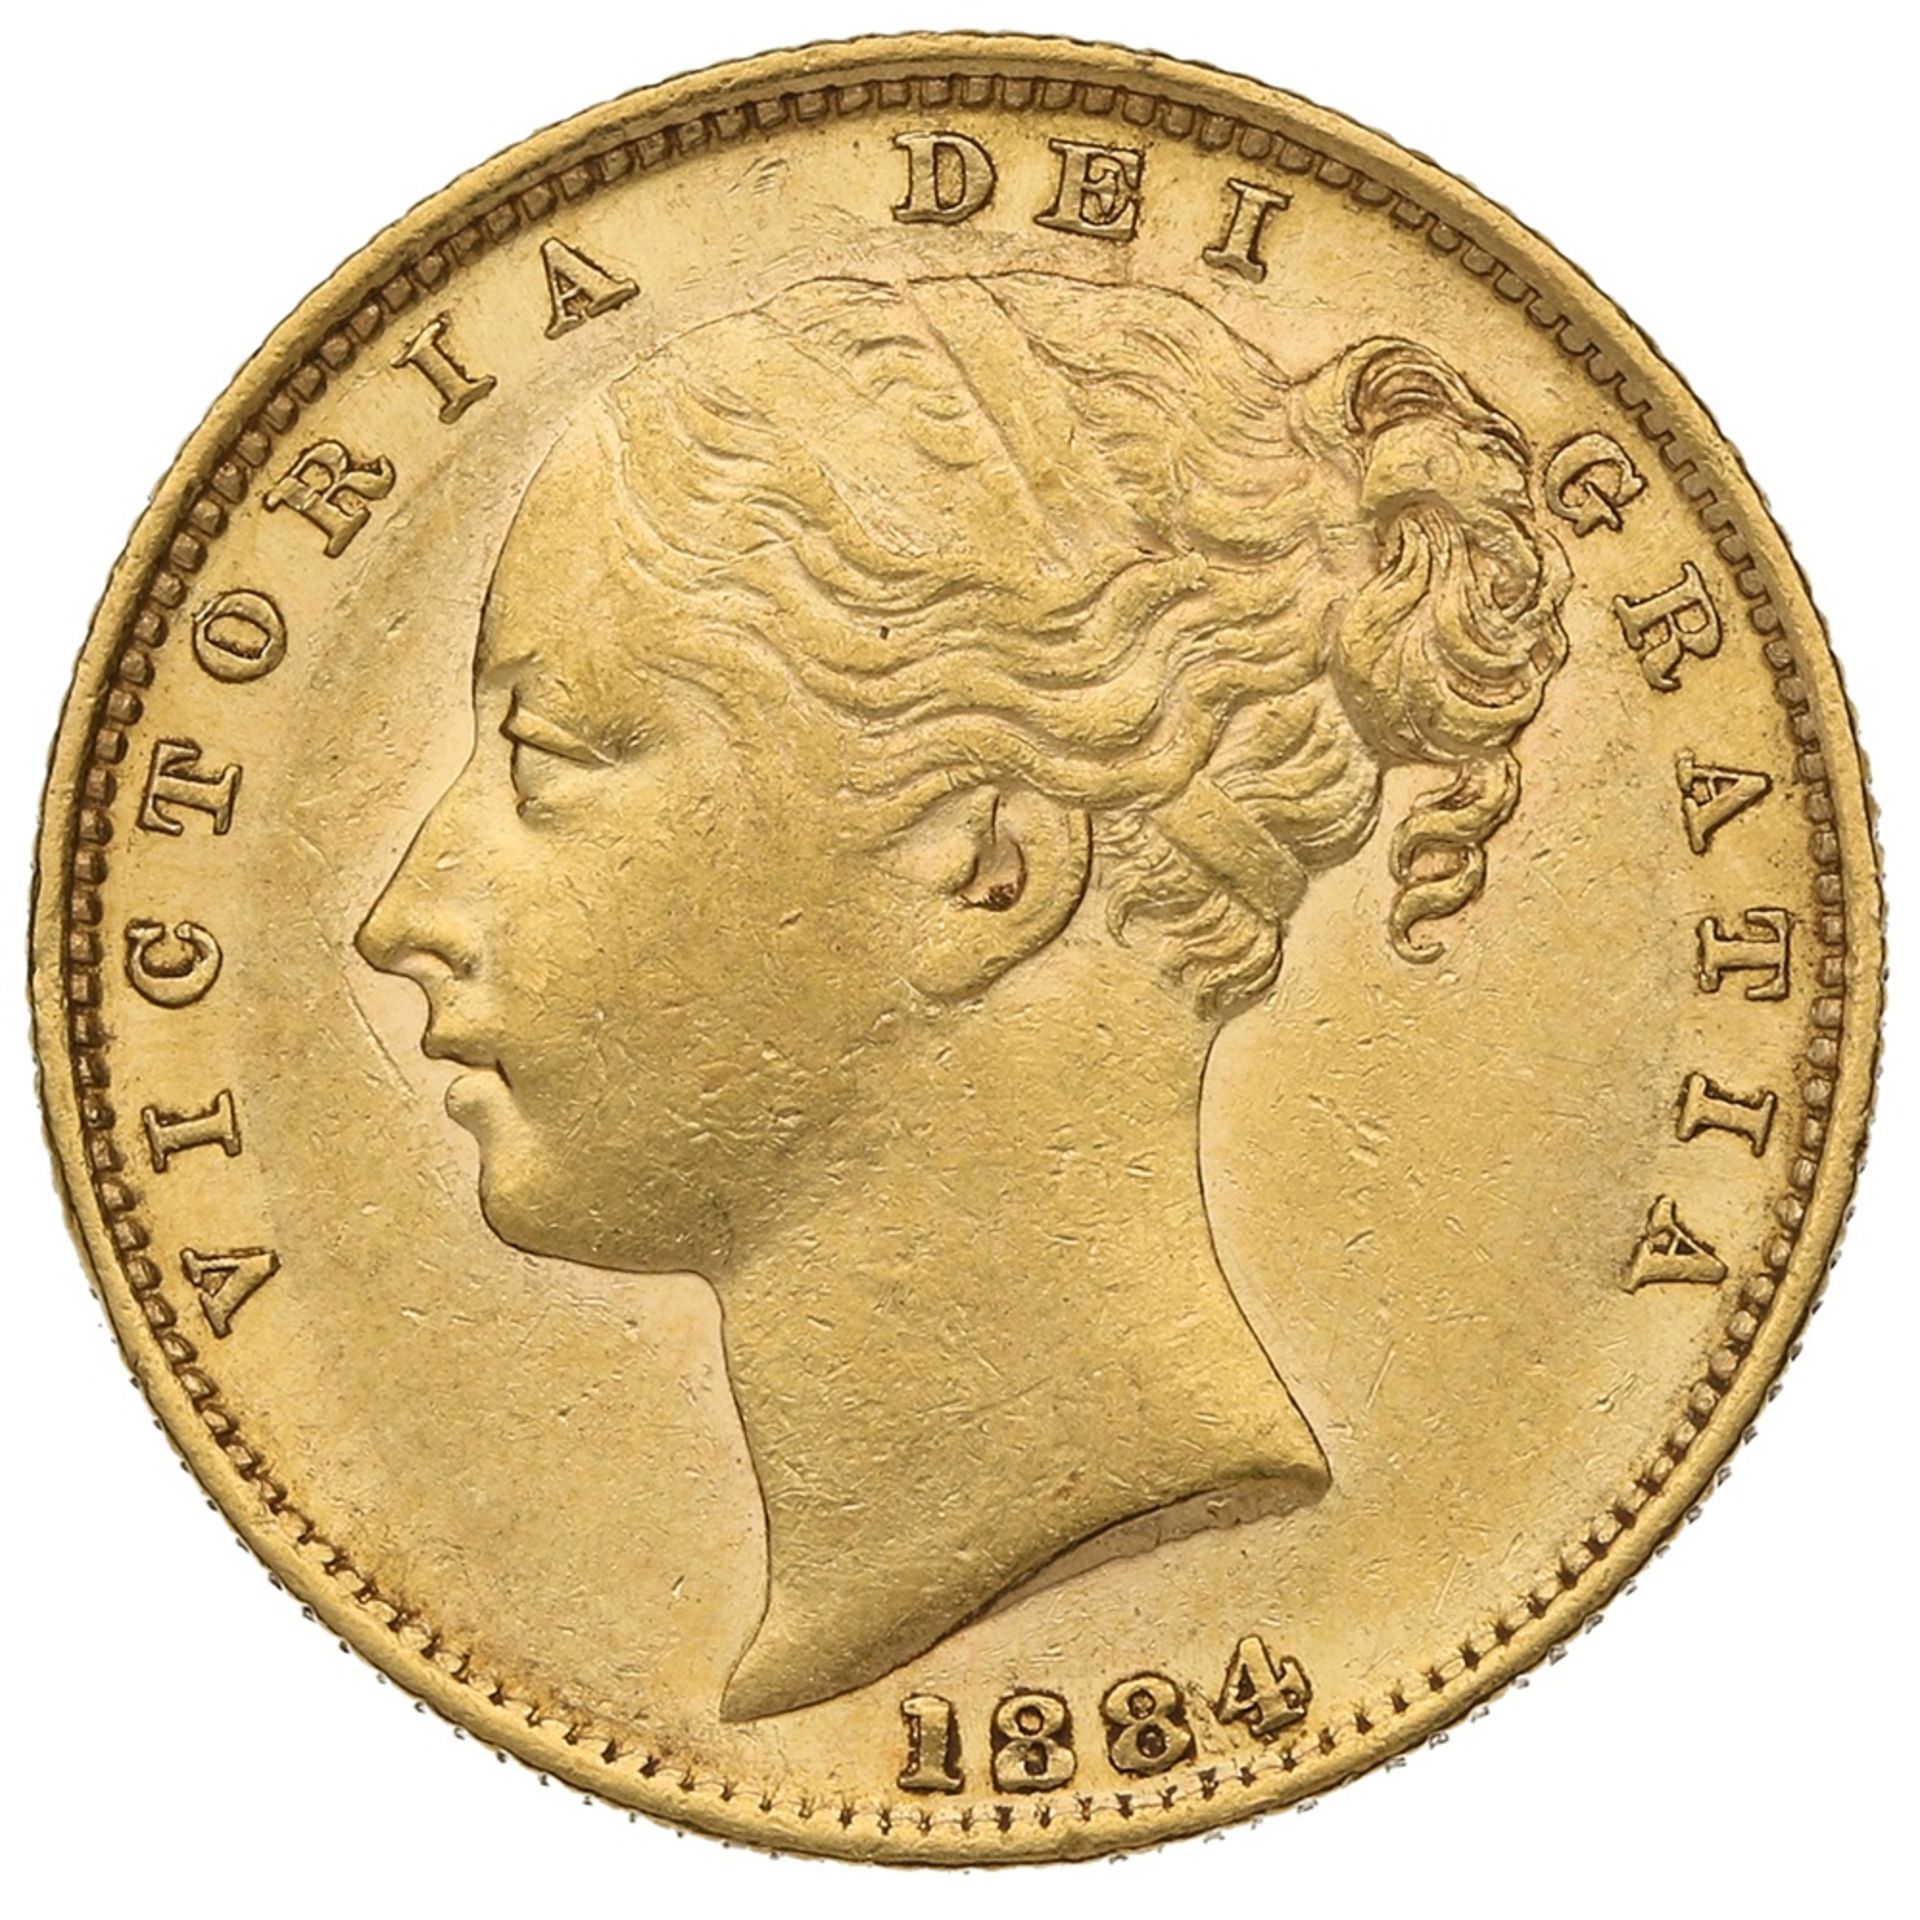 1973 Isle of Man, Elizabeth II, gold Sovereign